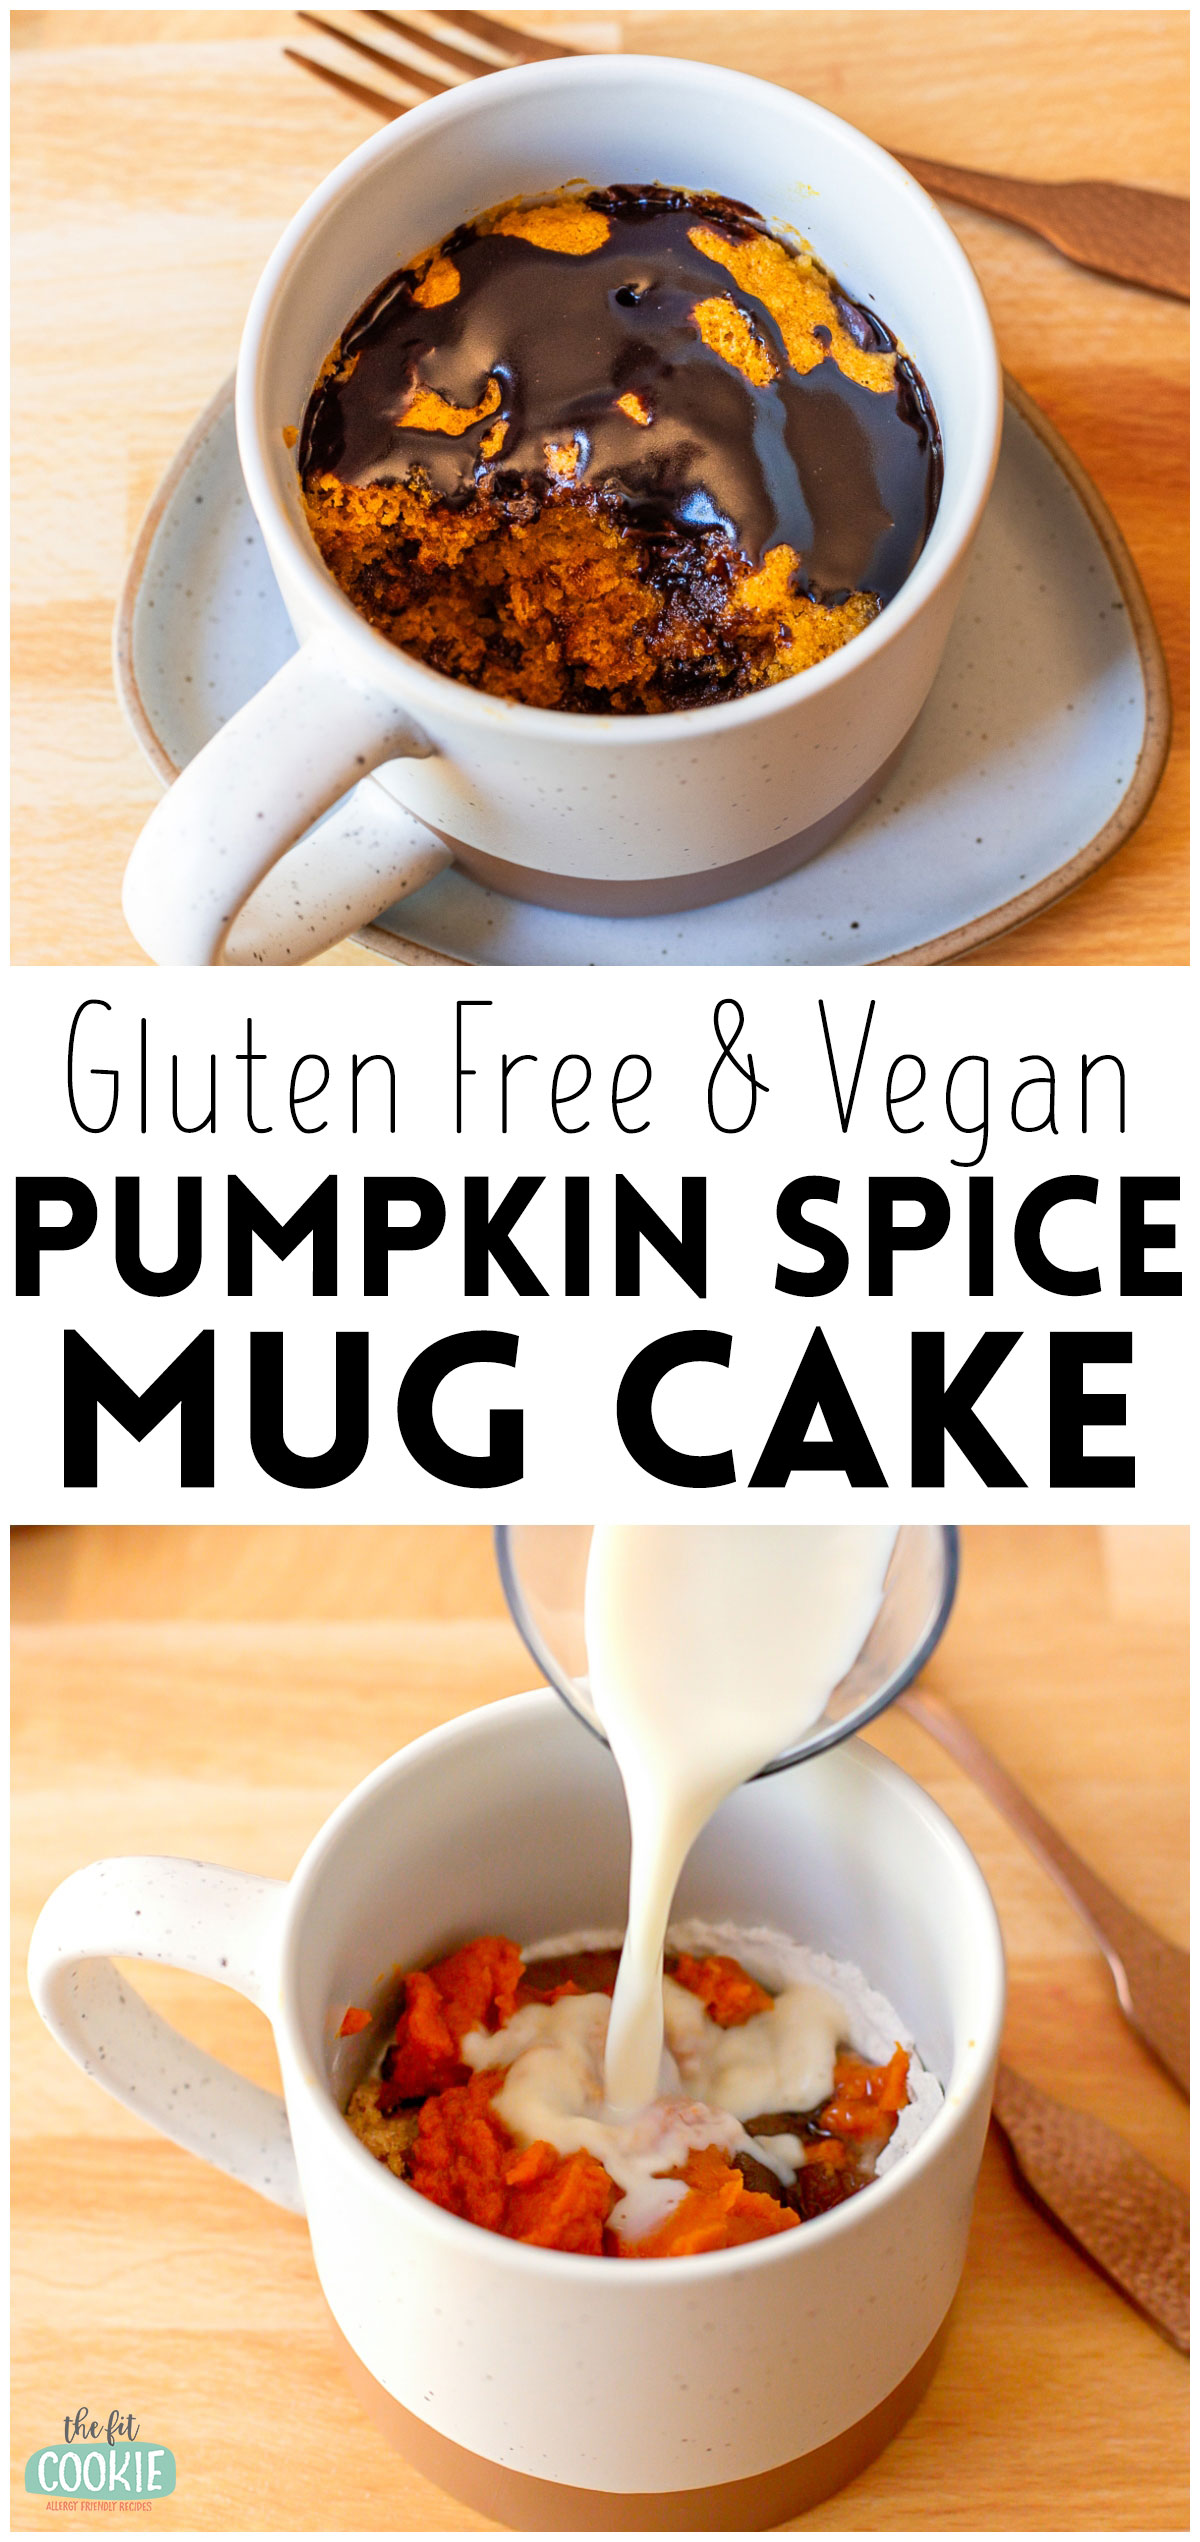 photo collage with text showing gluten free & vegan pumpkin mug cake.